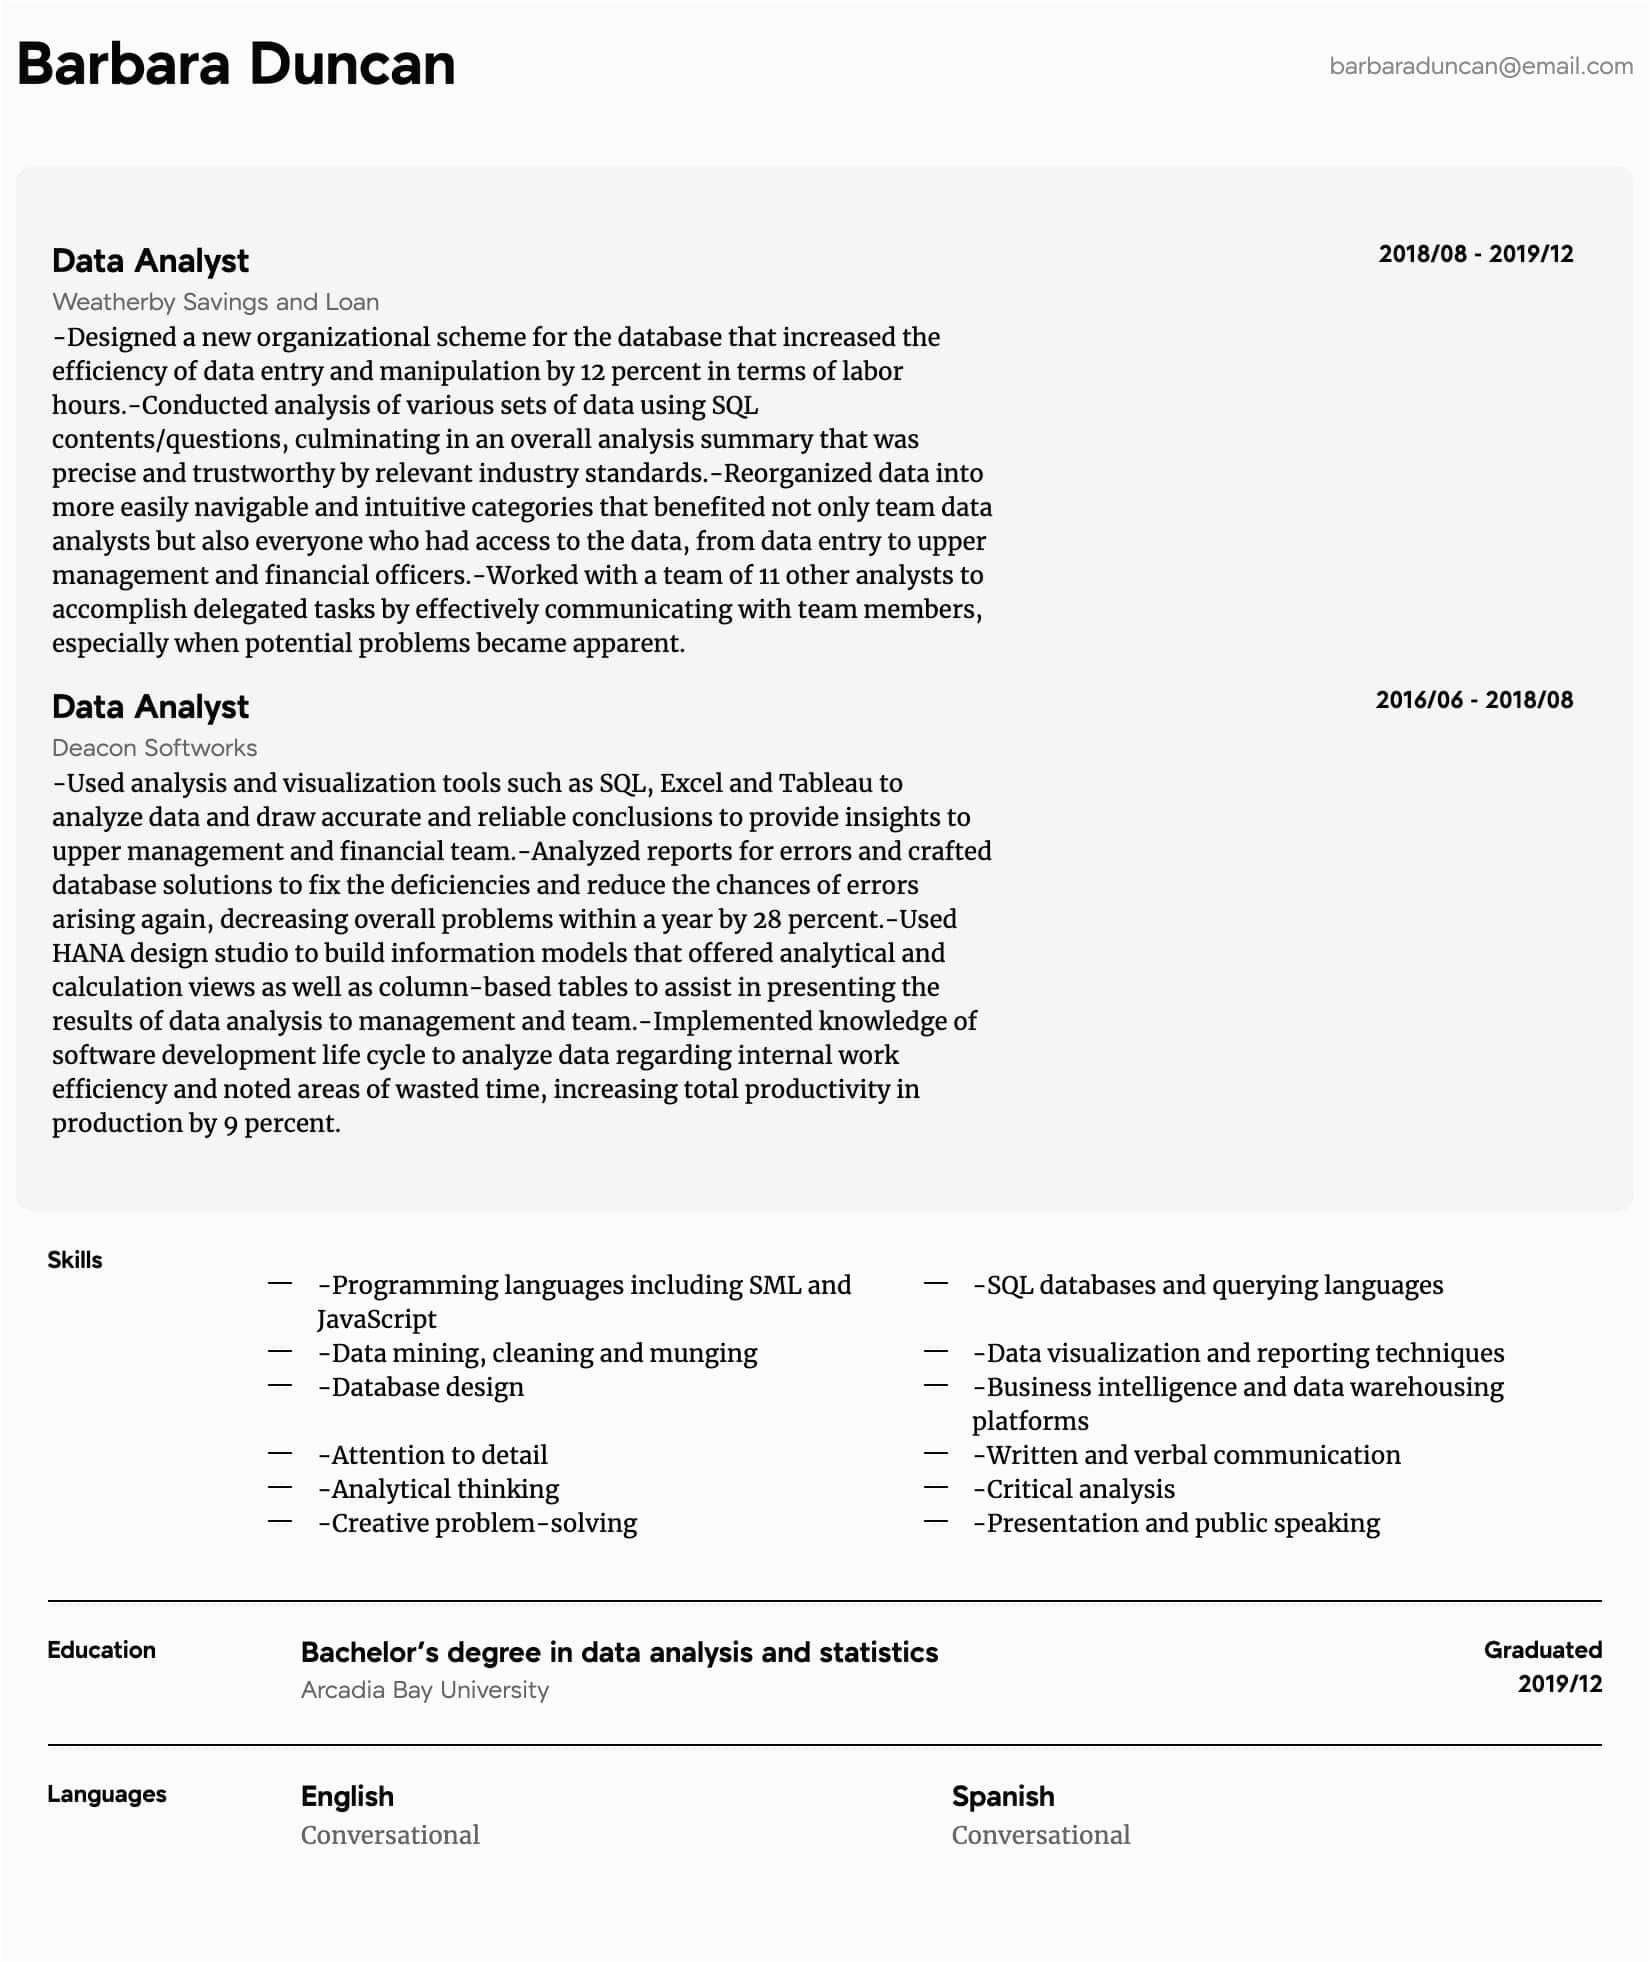 Sample Resume for Experienced Data Analyst Data Analyst Resume Samples